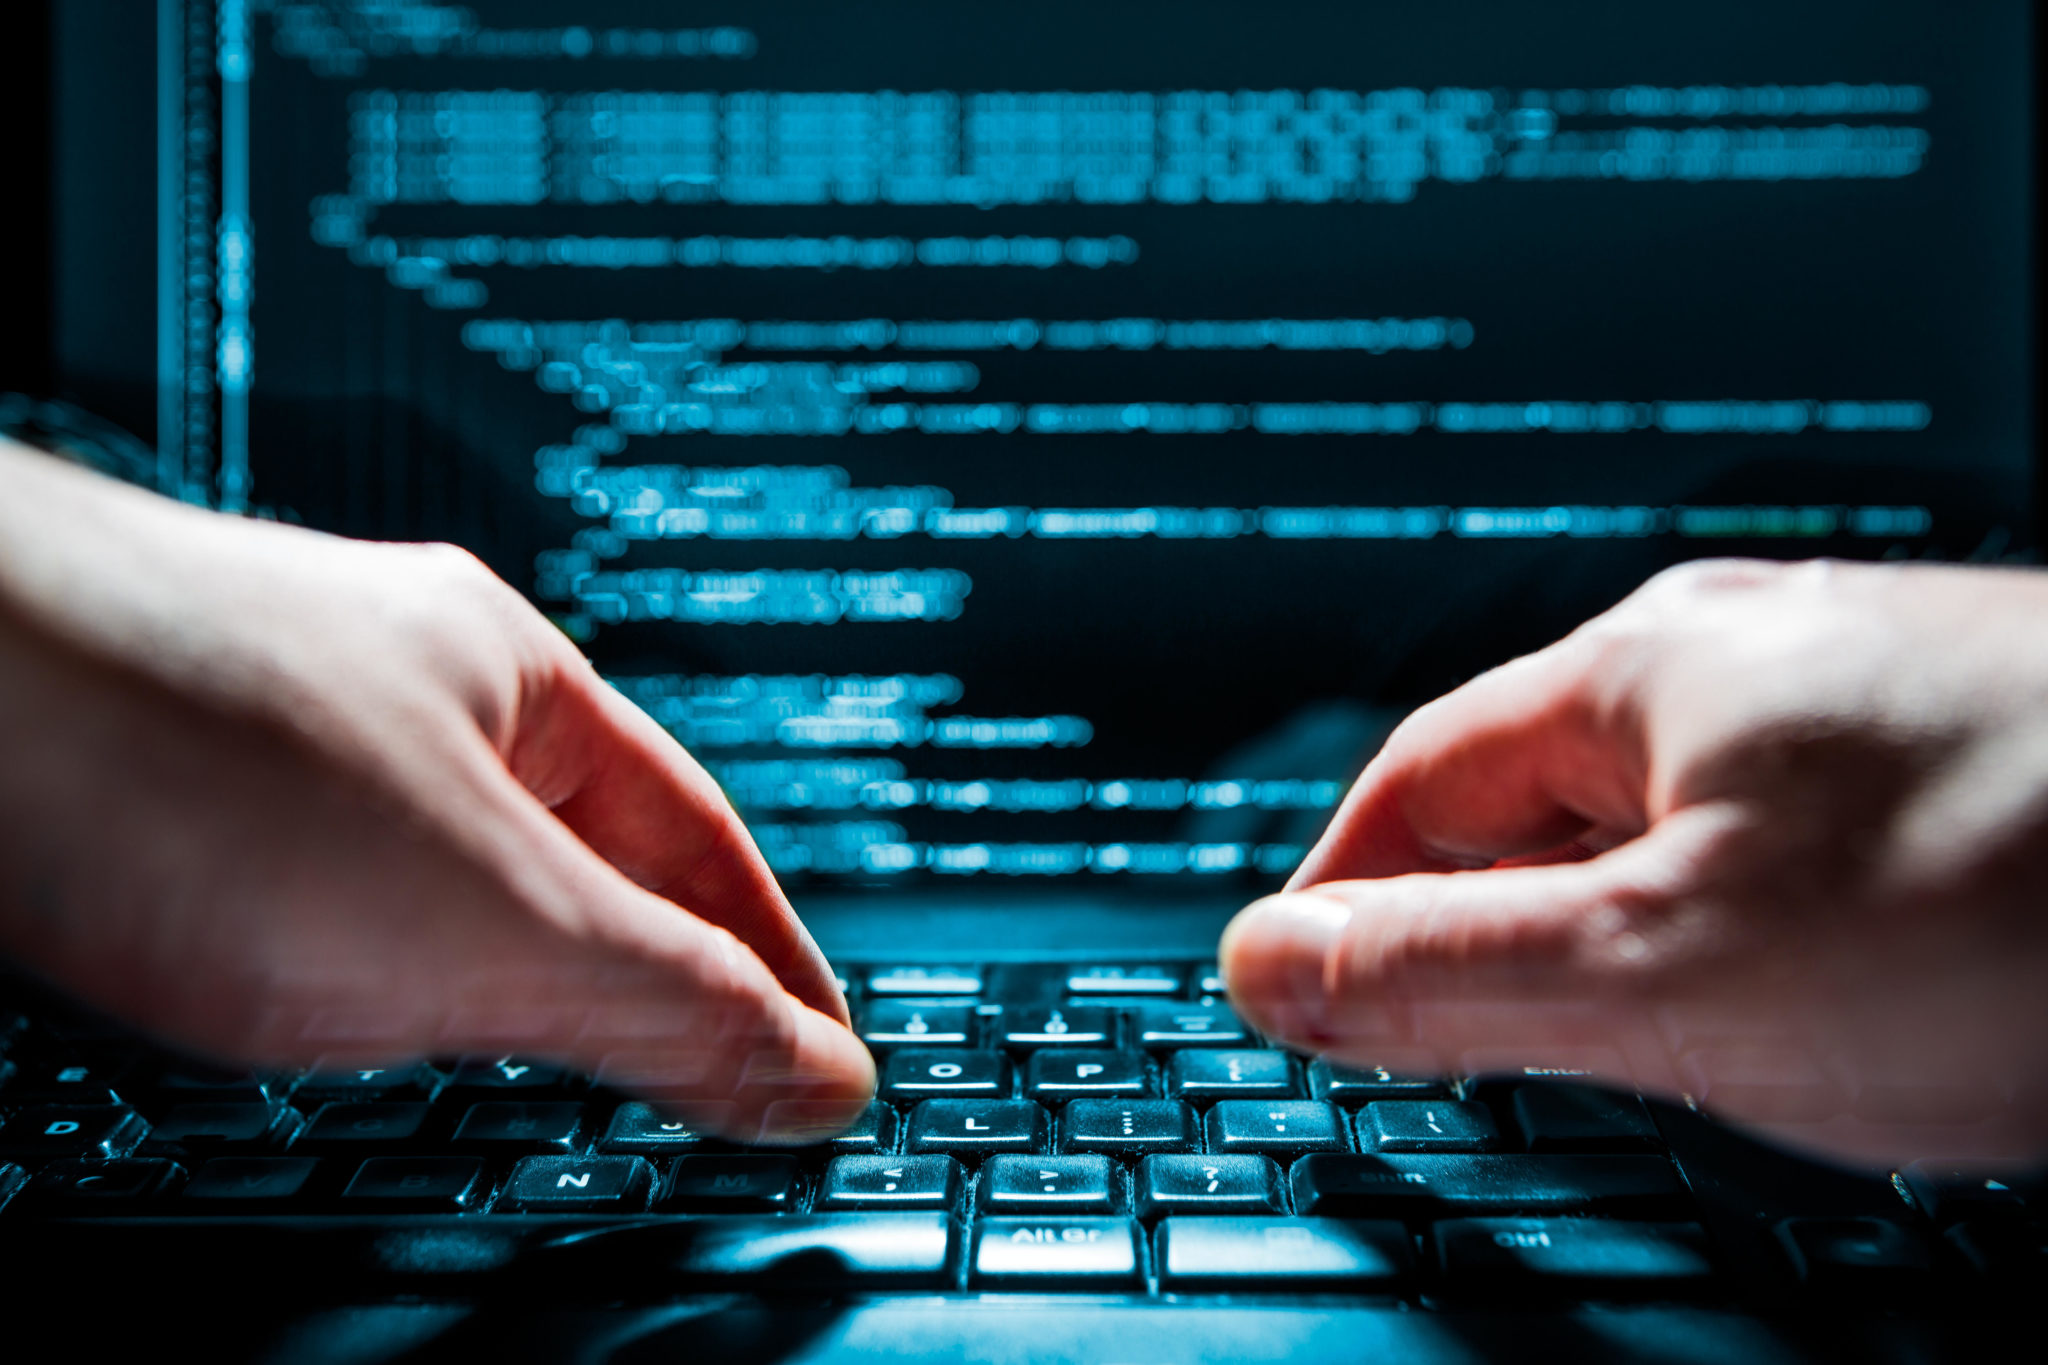 A hacker using a laptop, 19-12-13.